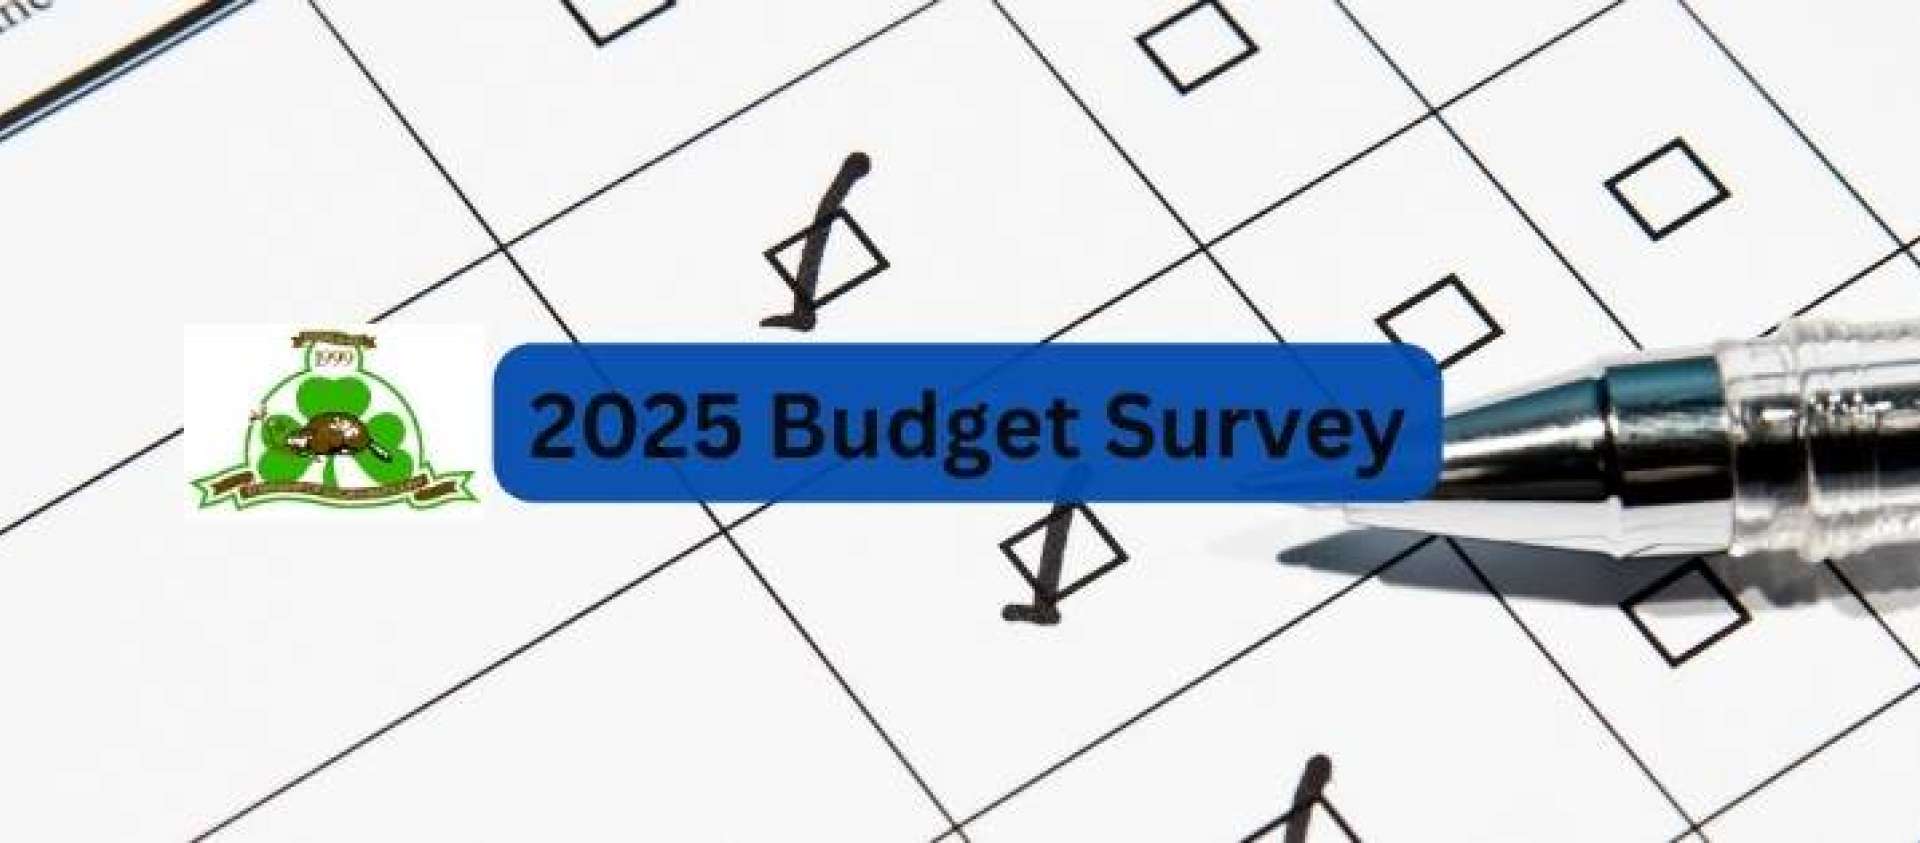 2025 Budget Survey